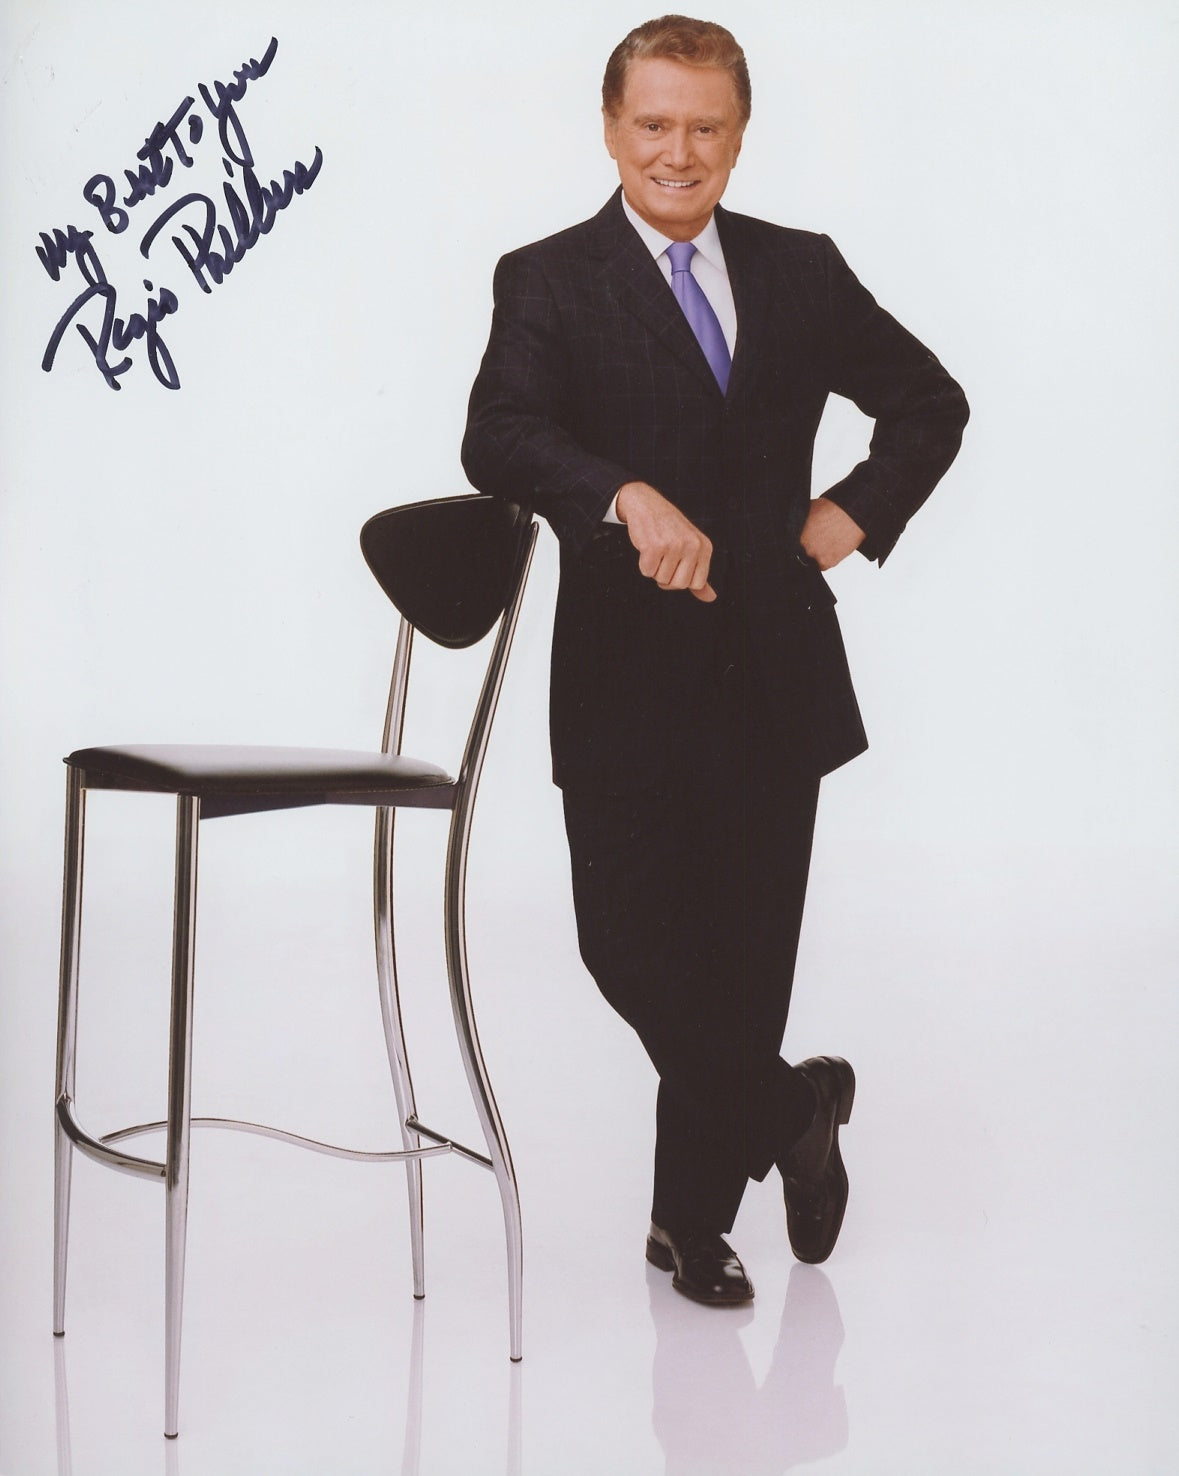 Regis Philbin Signed 8x10 Photo